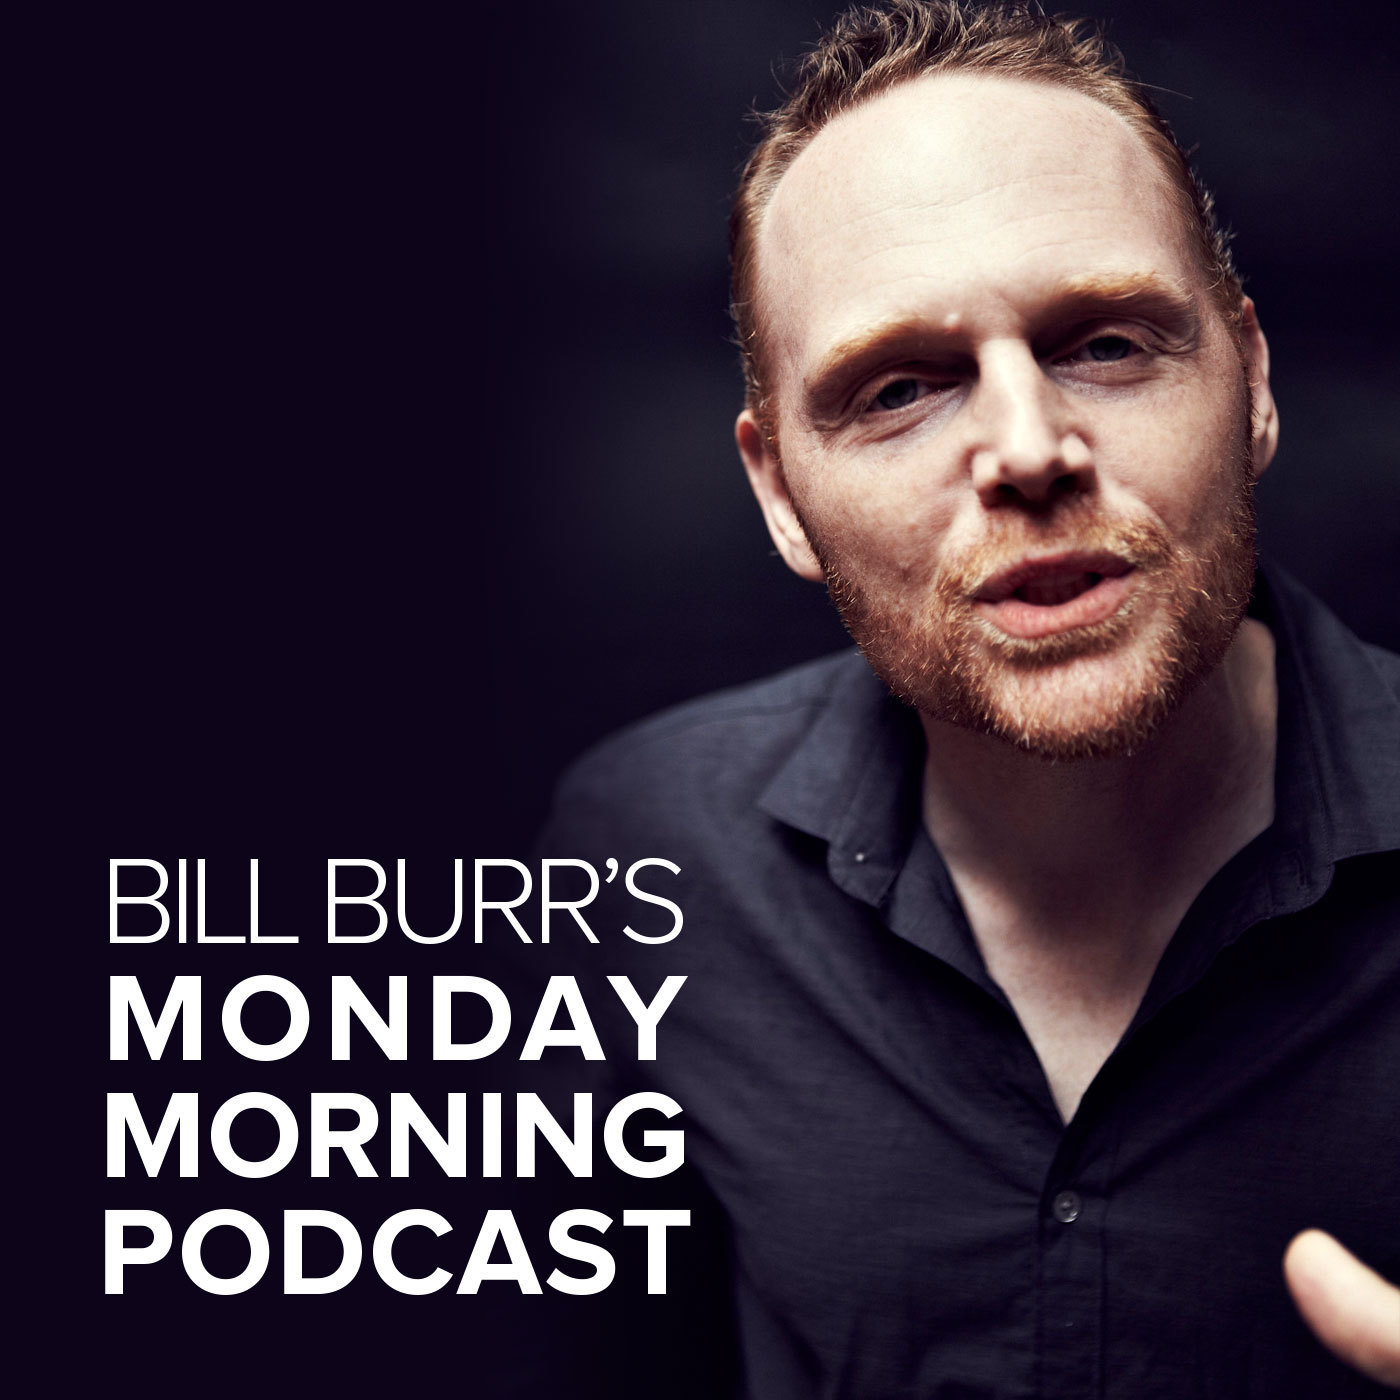 Monday Morning Podcast 3-2-15